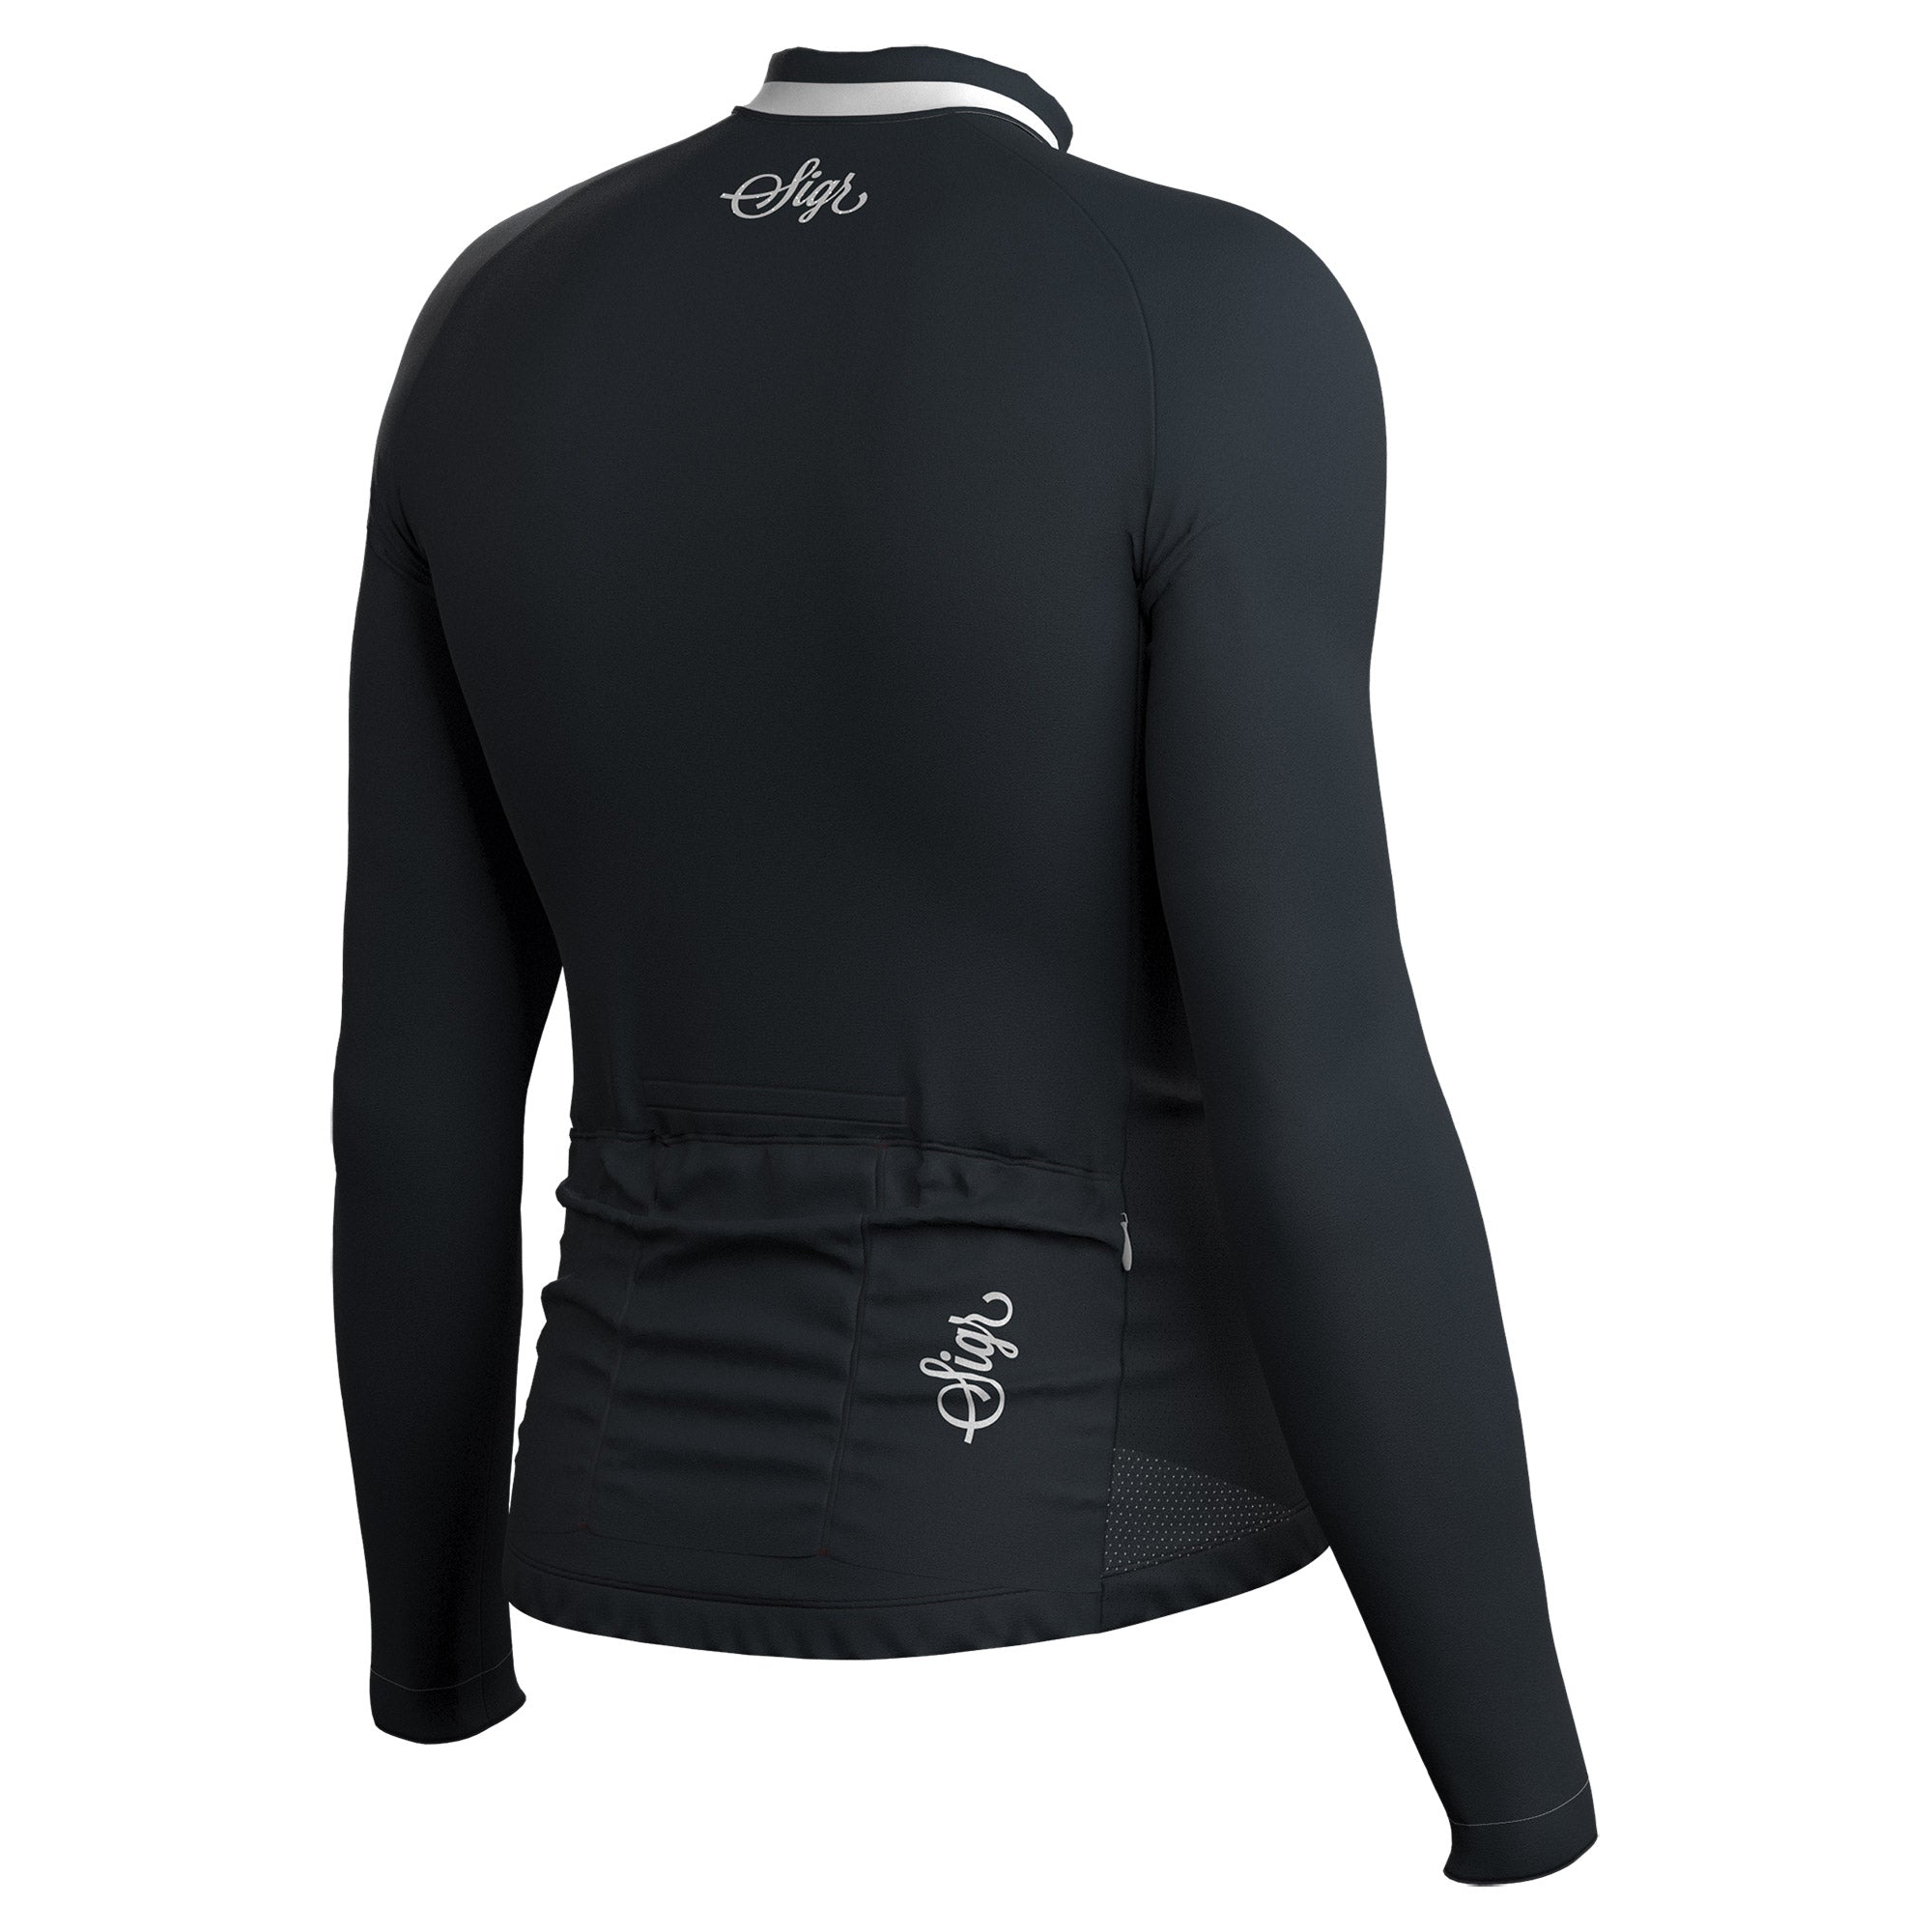 Krokus Black - Warmer Long Sleeved Jersey for Men